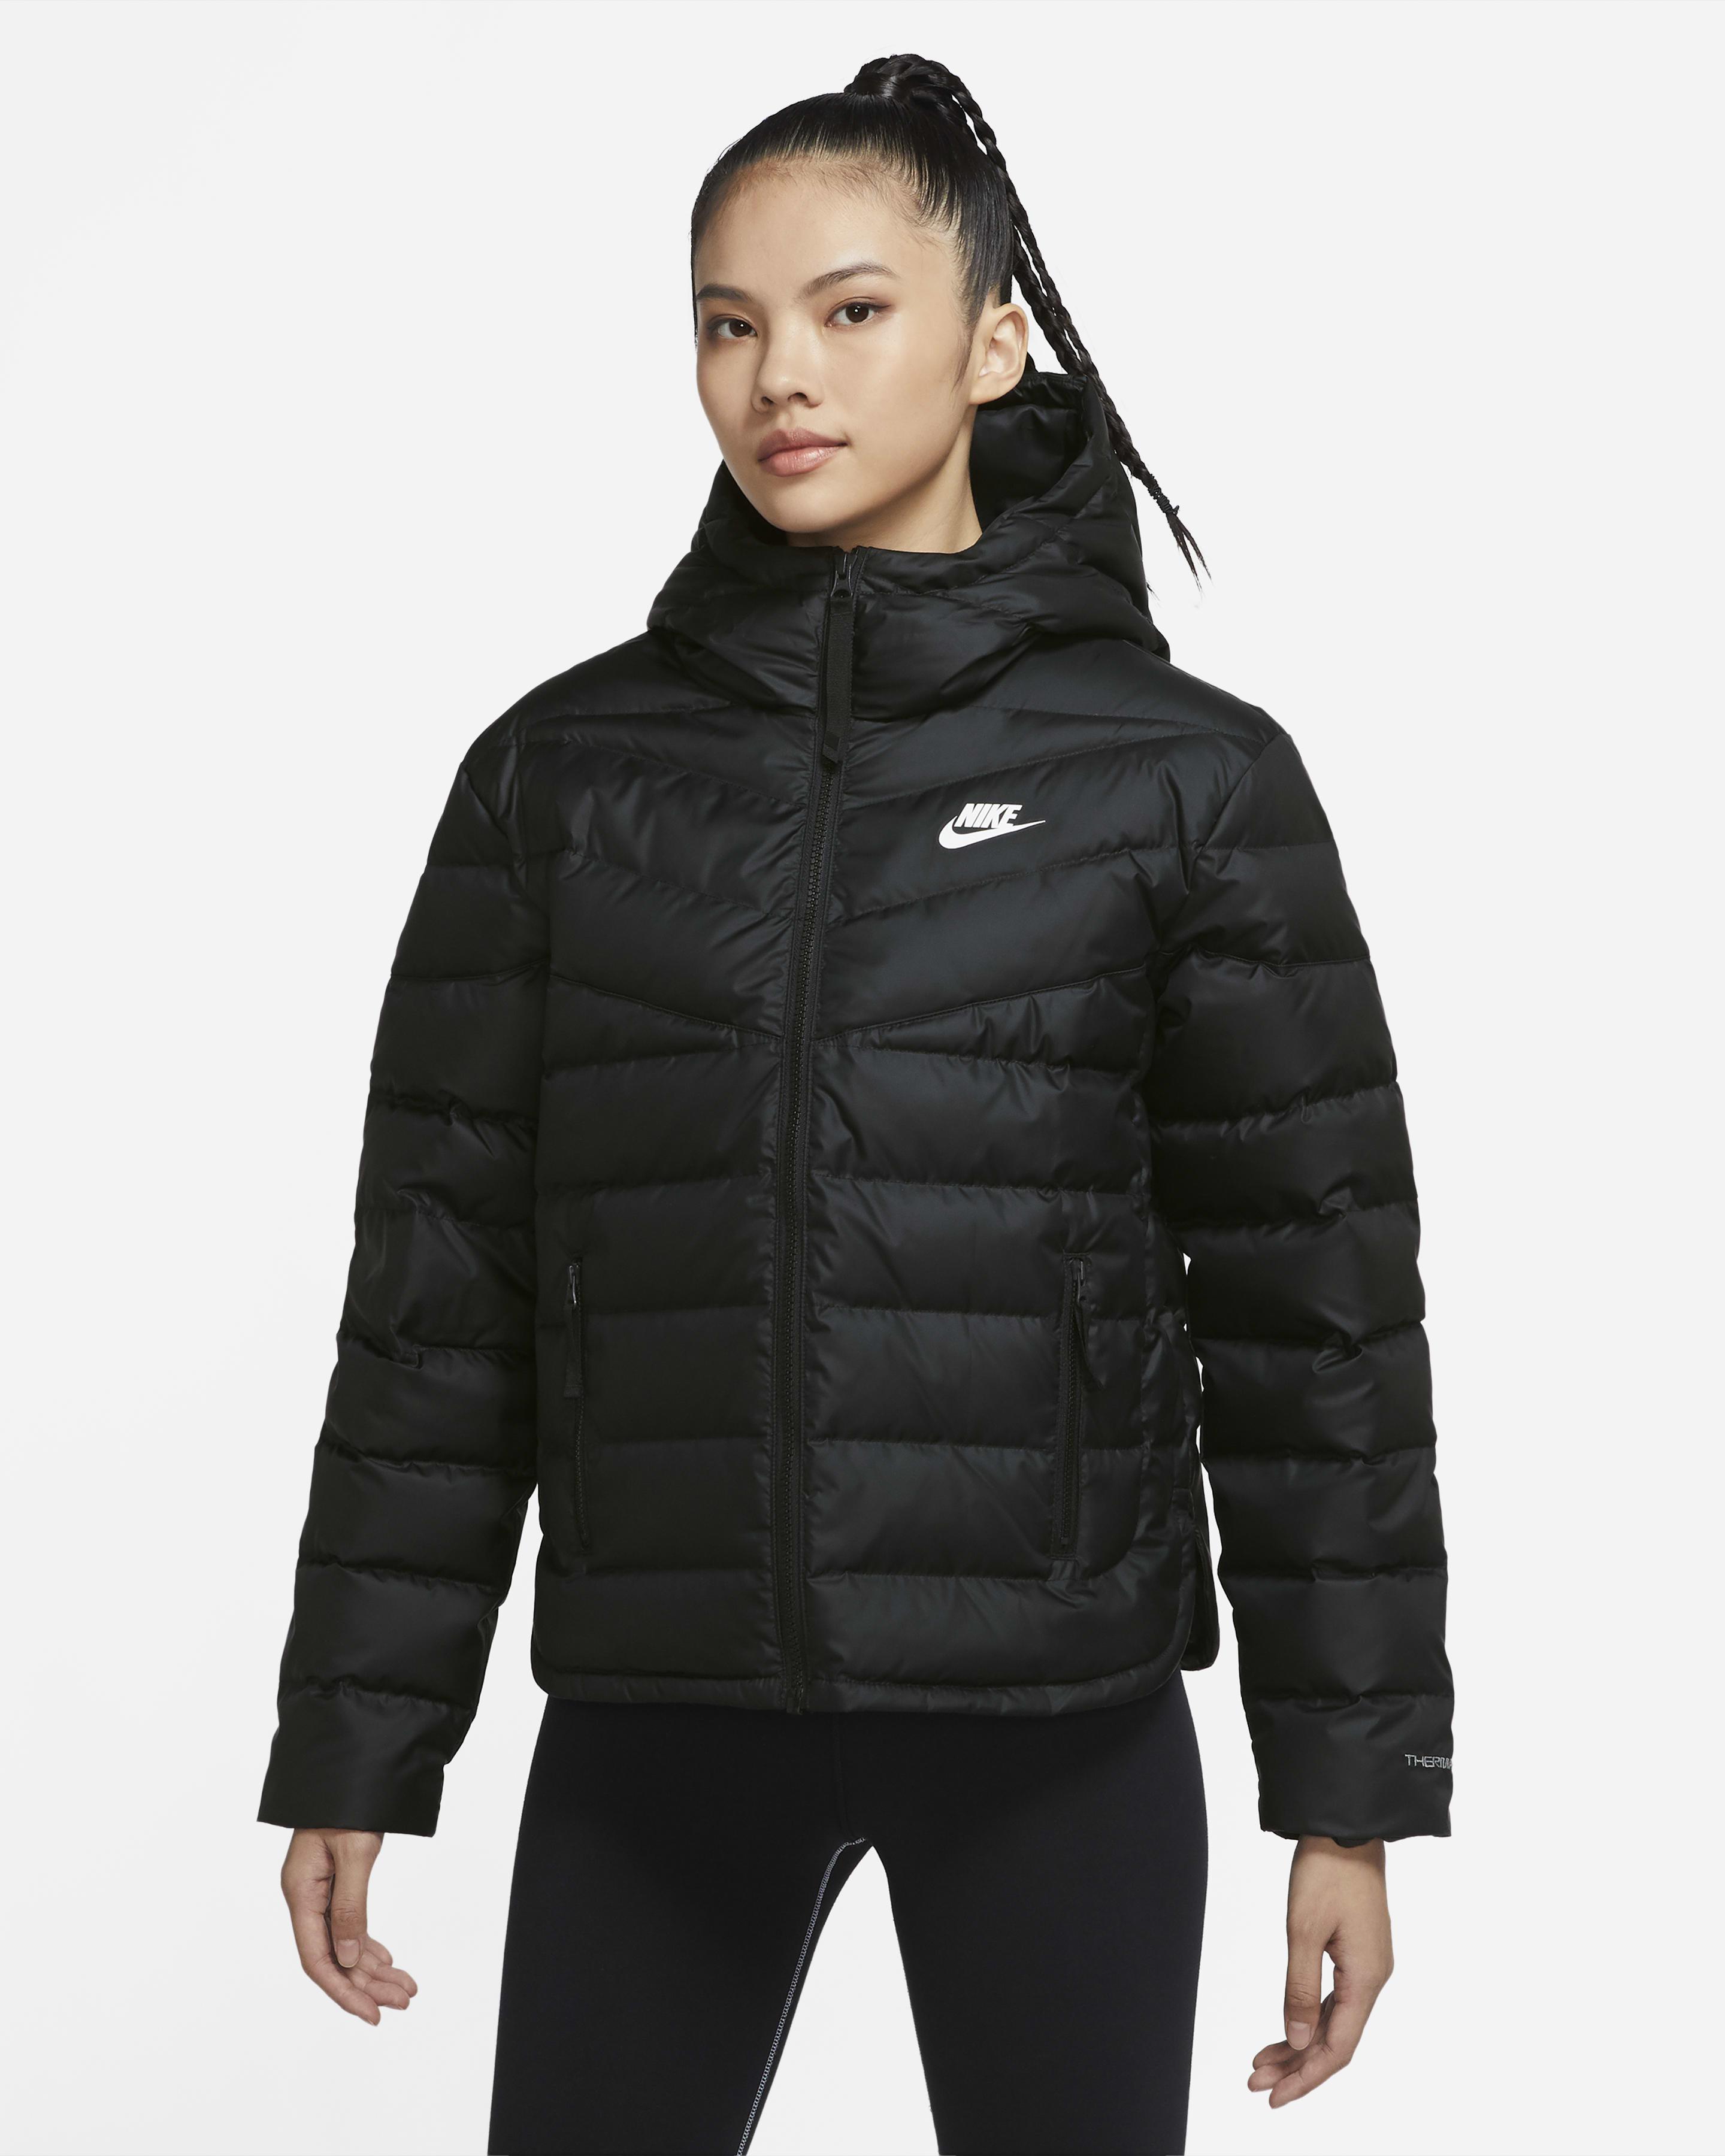 Nike Sportswear Therma-fit Repel Windrunner Jacket in Black | Lyst